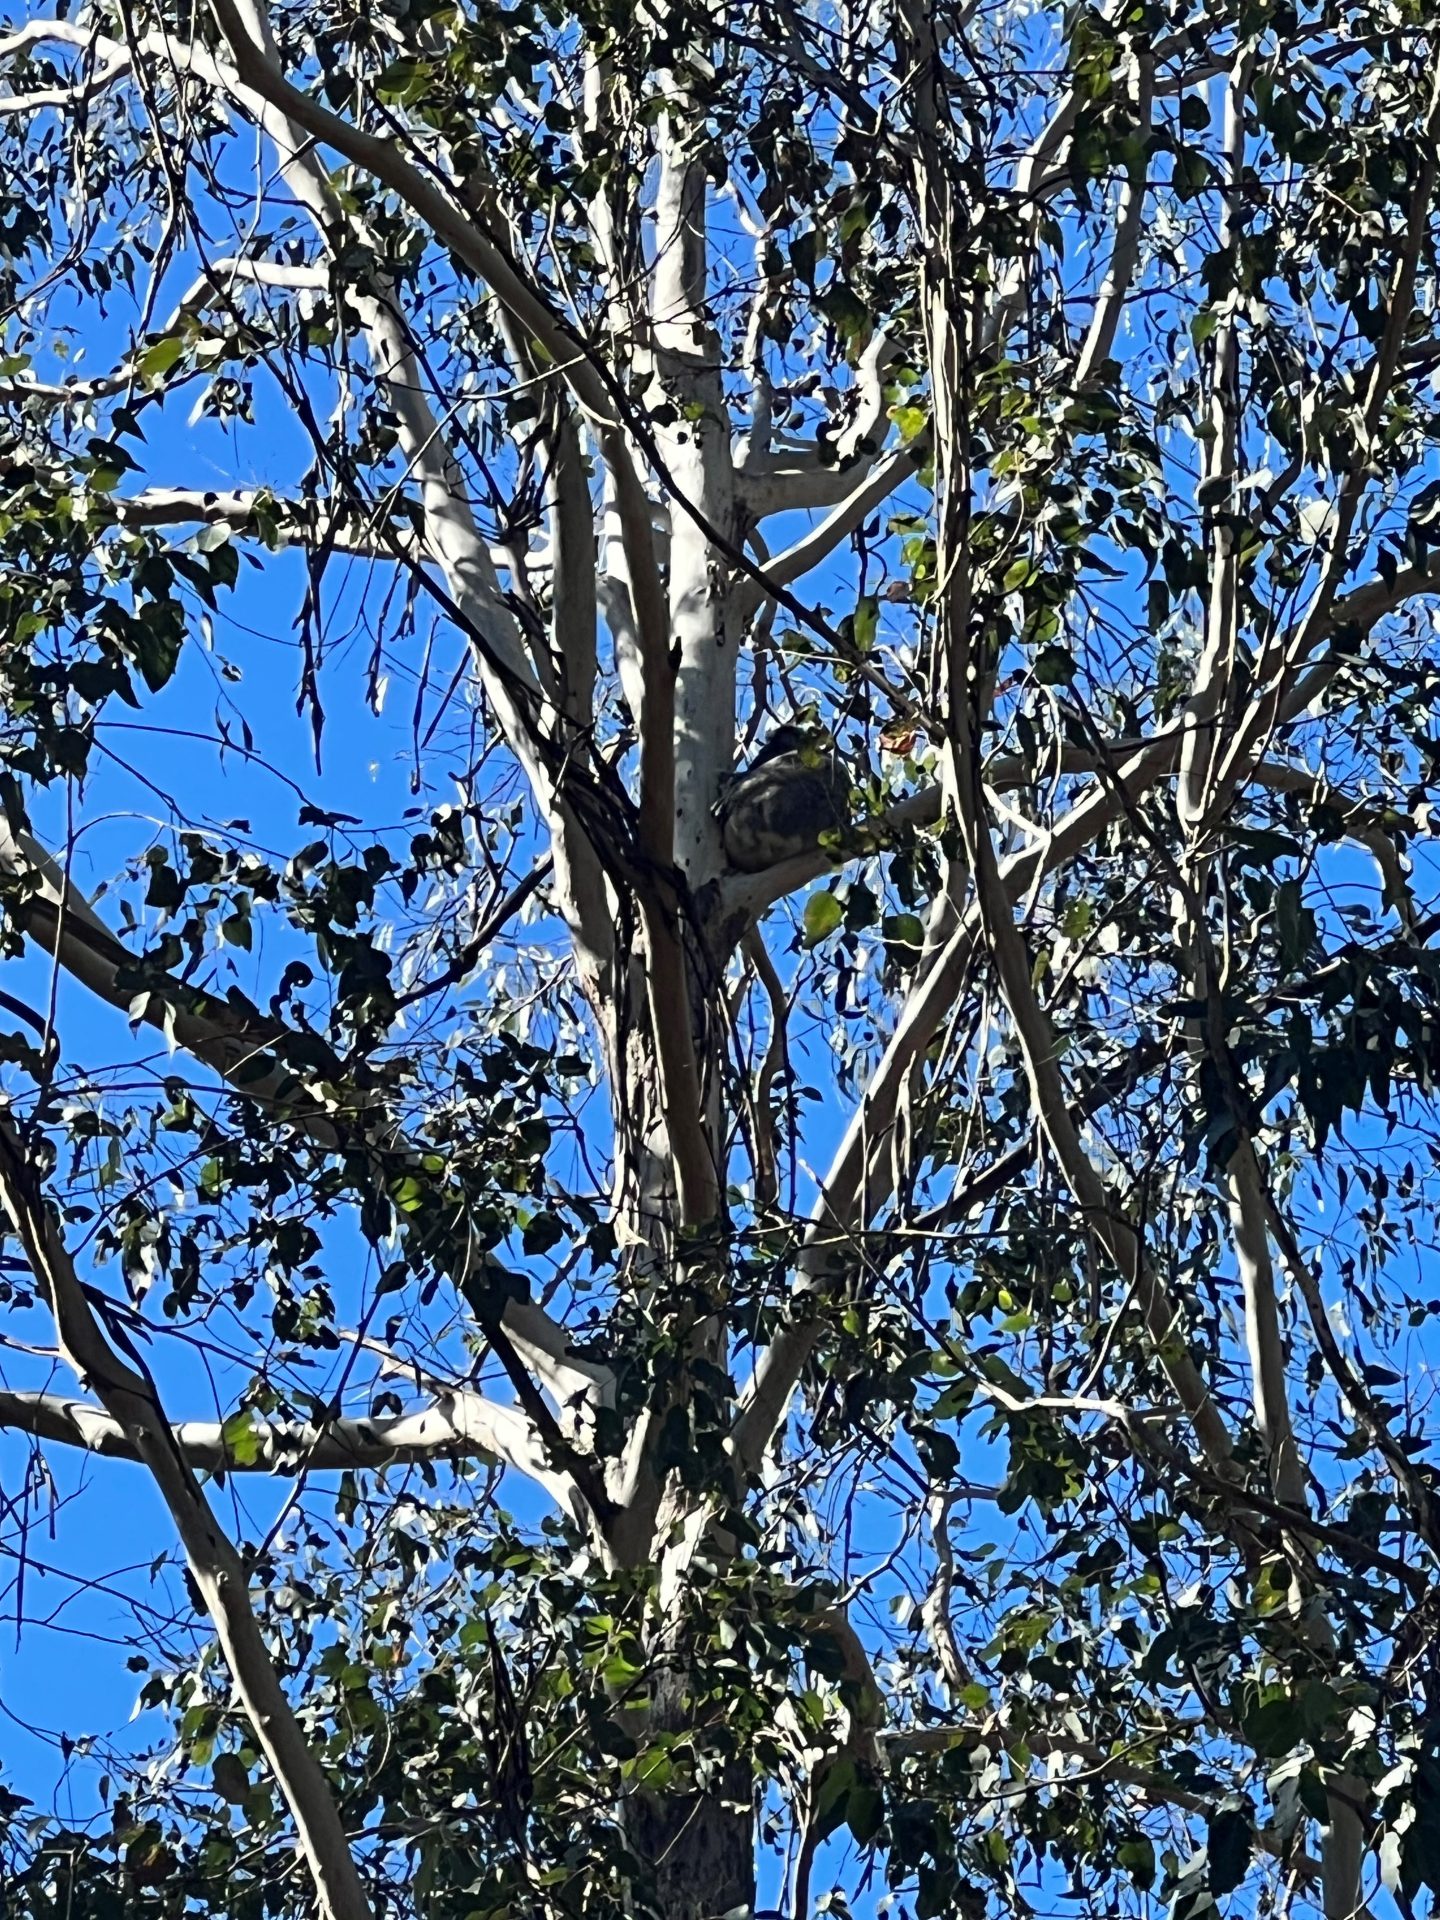 Koala in the wild near Koala Hospital